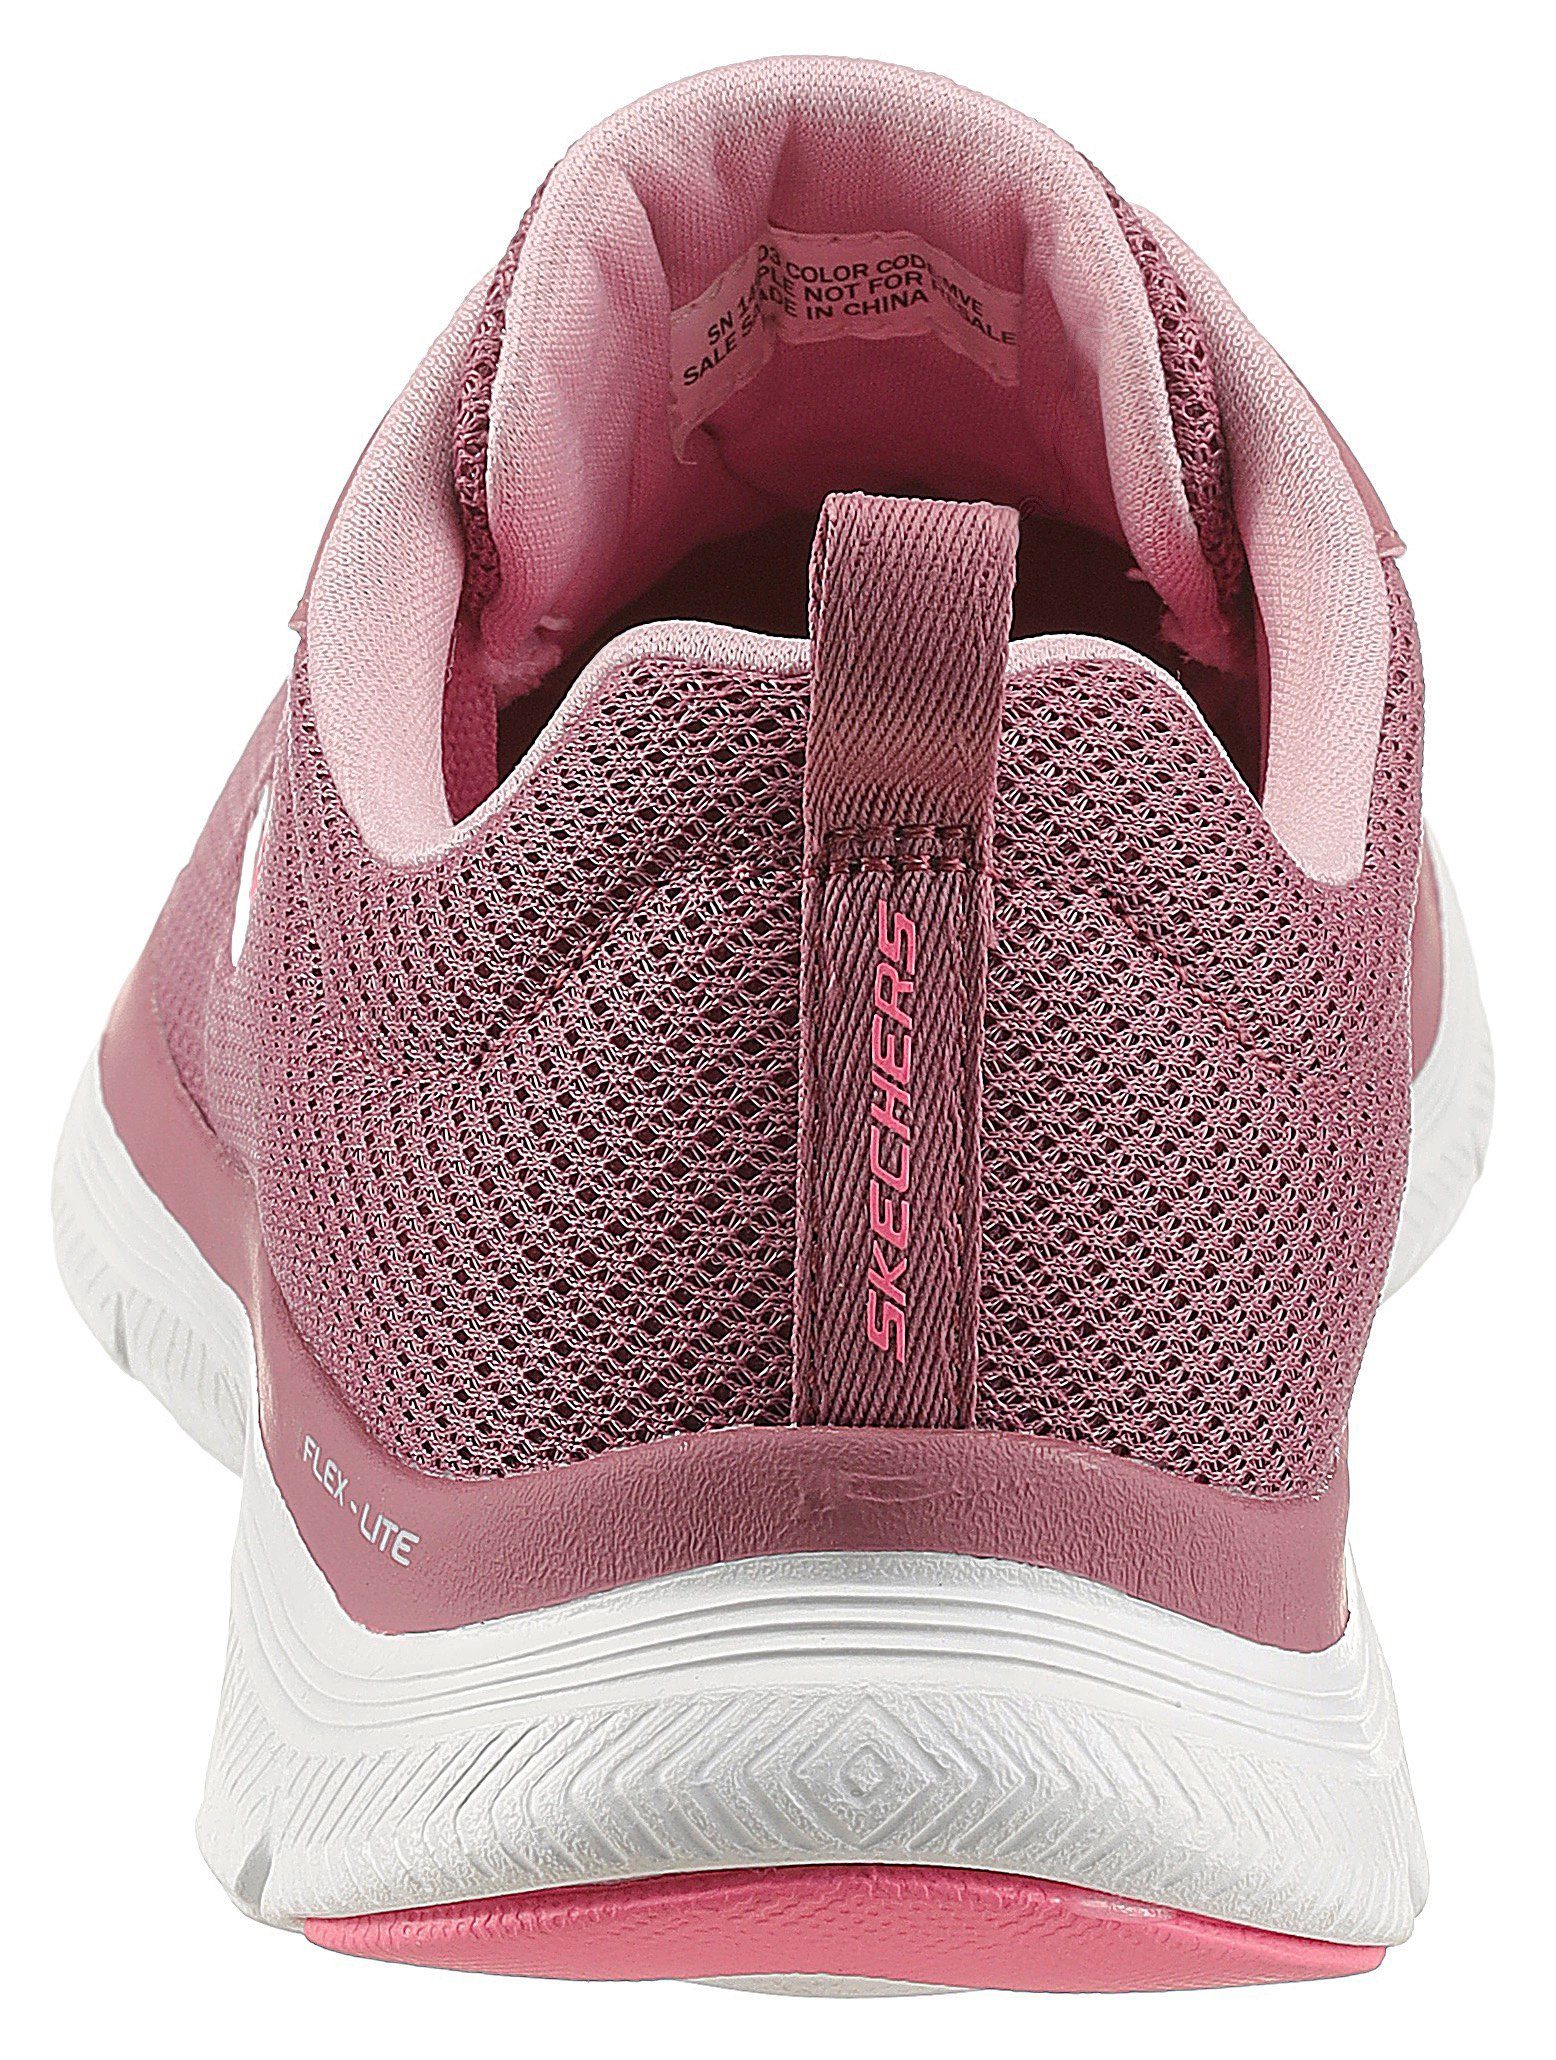 BRILLINAT FLEX Sneaker VIEW Foam APPEAL mauve-rosa Air-Cooled Ausstattung mit Skechers 4.0 Memory